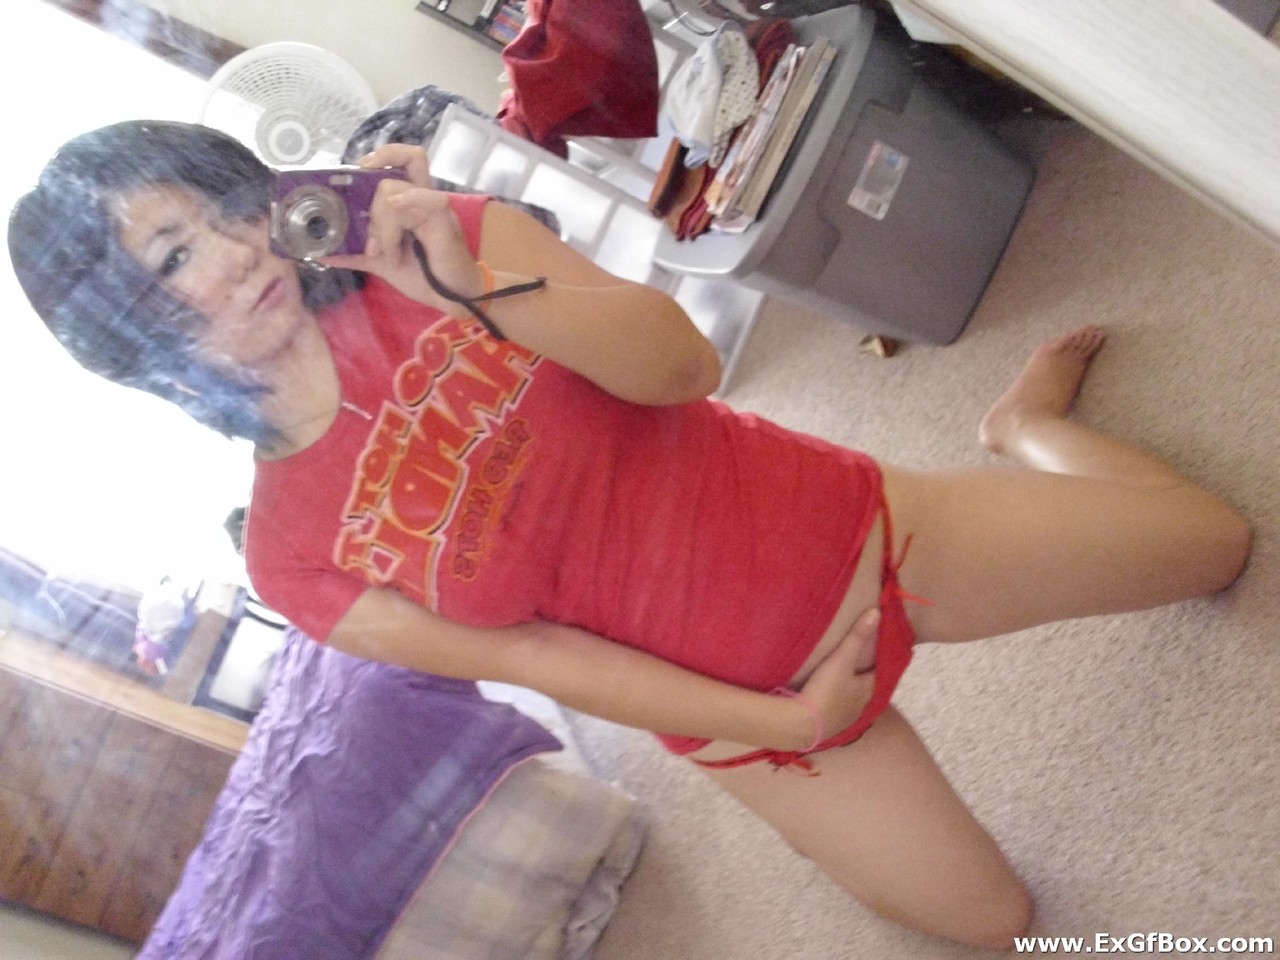 Bootylicious teenage girlfriend takes selfies of her hot body while stripping порно фото #426010454 | Ex GF Box Pics, Selfie, мобильное порно